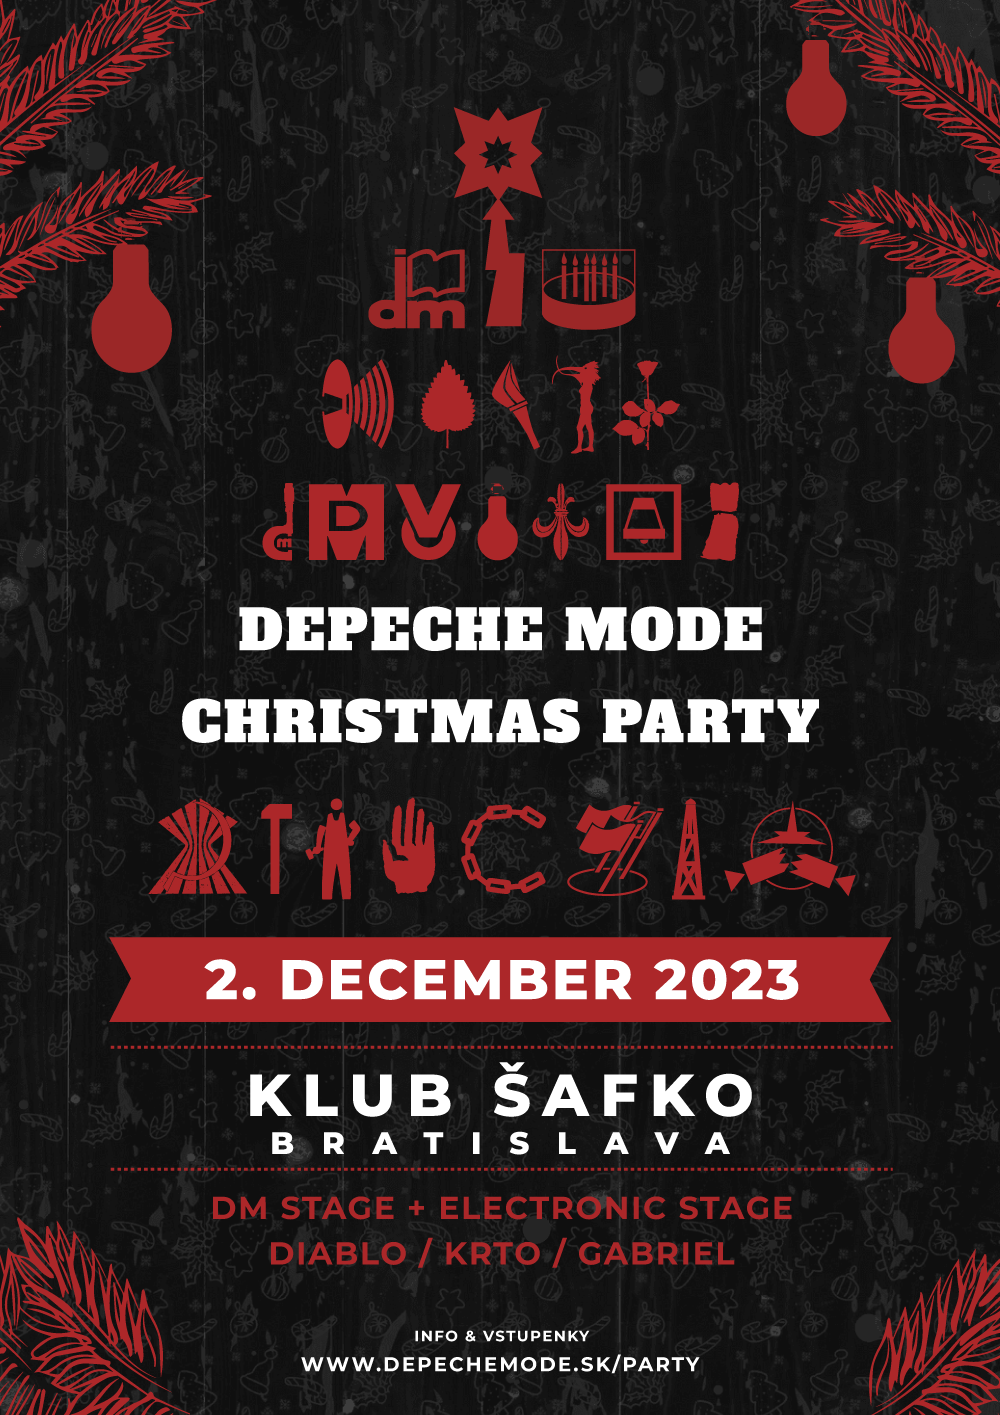 Bratislava: Depeche Mode Christmas Party